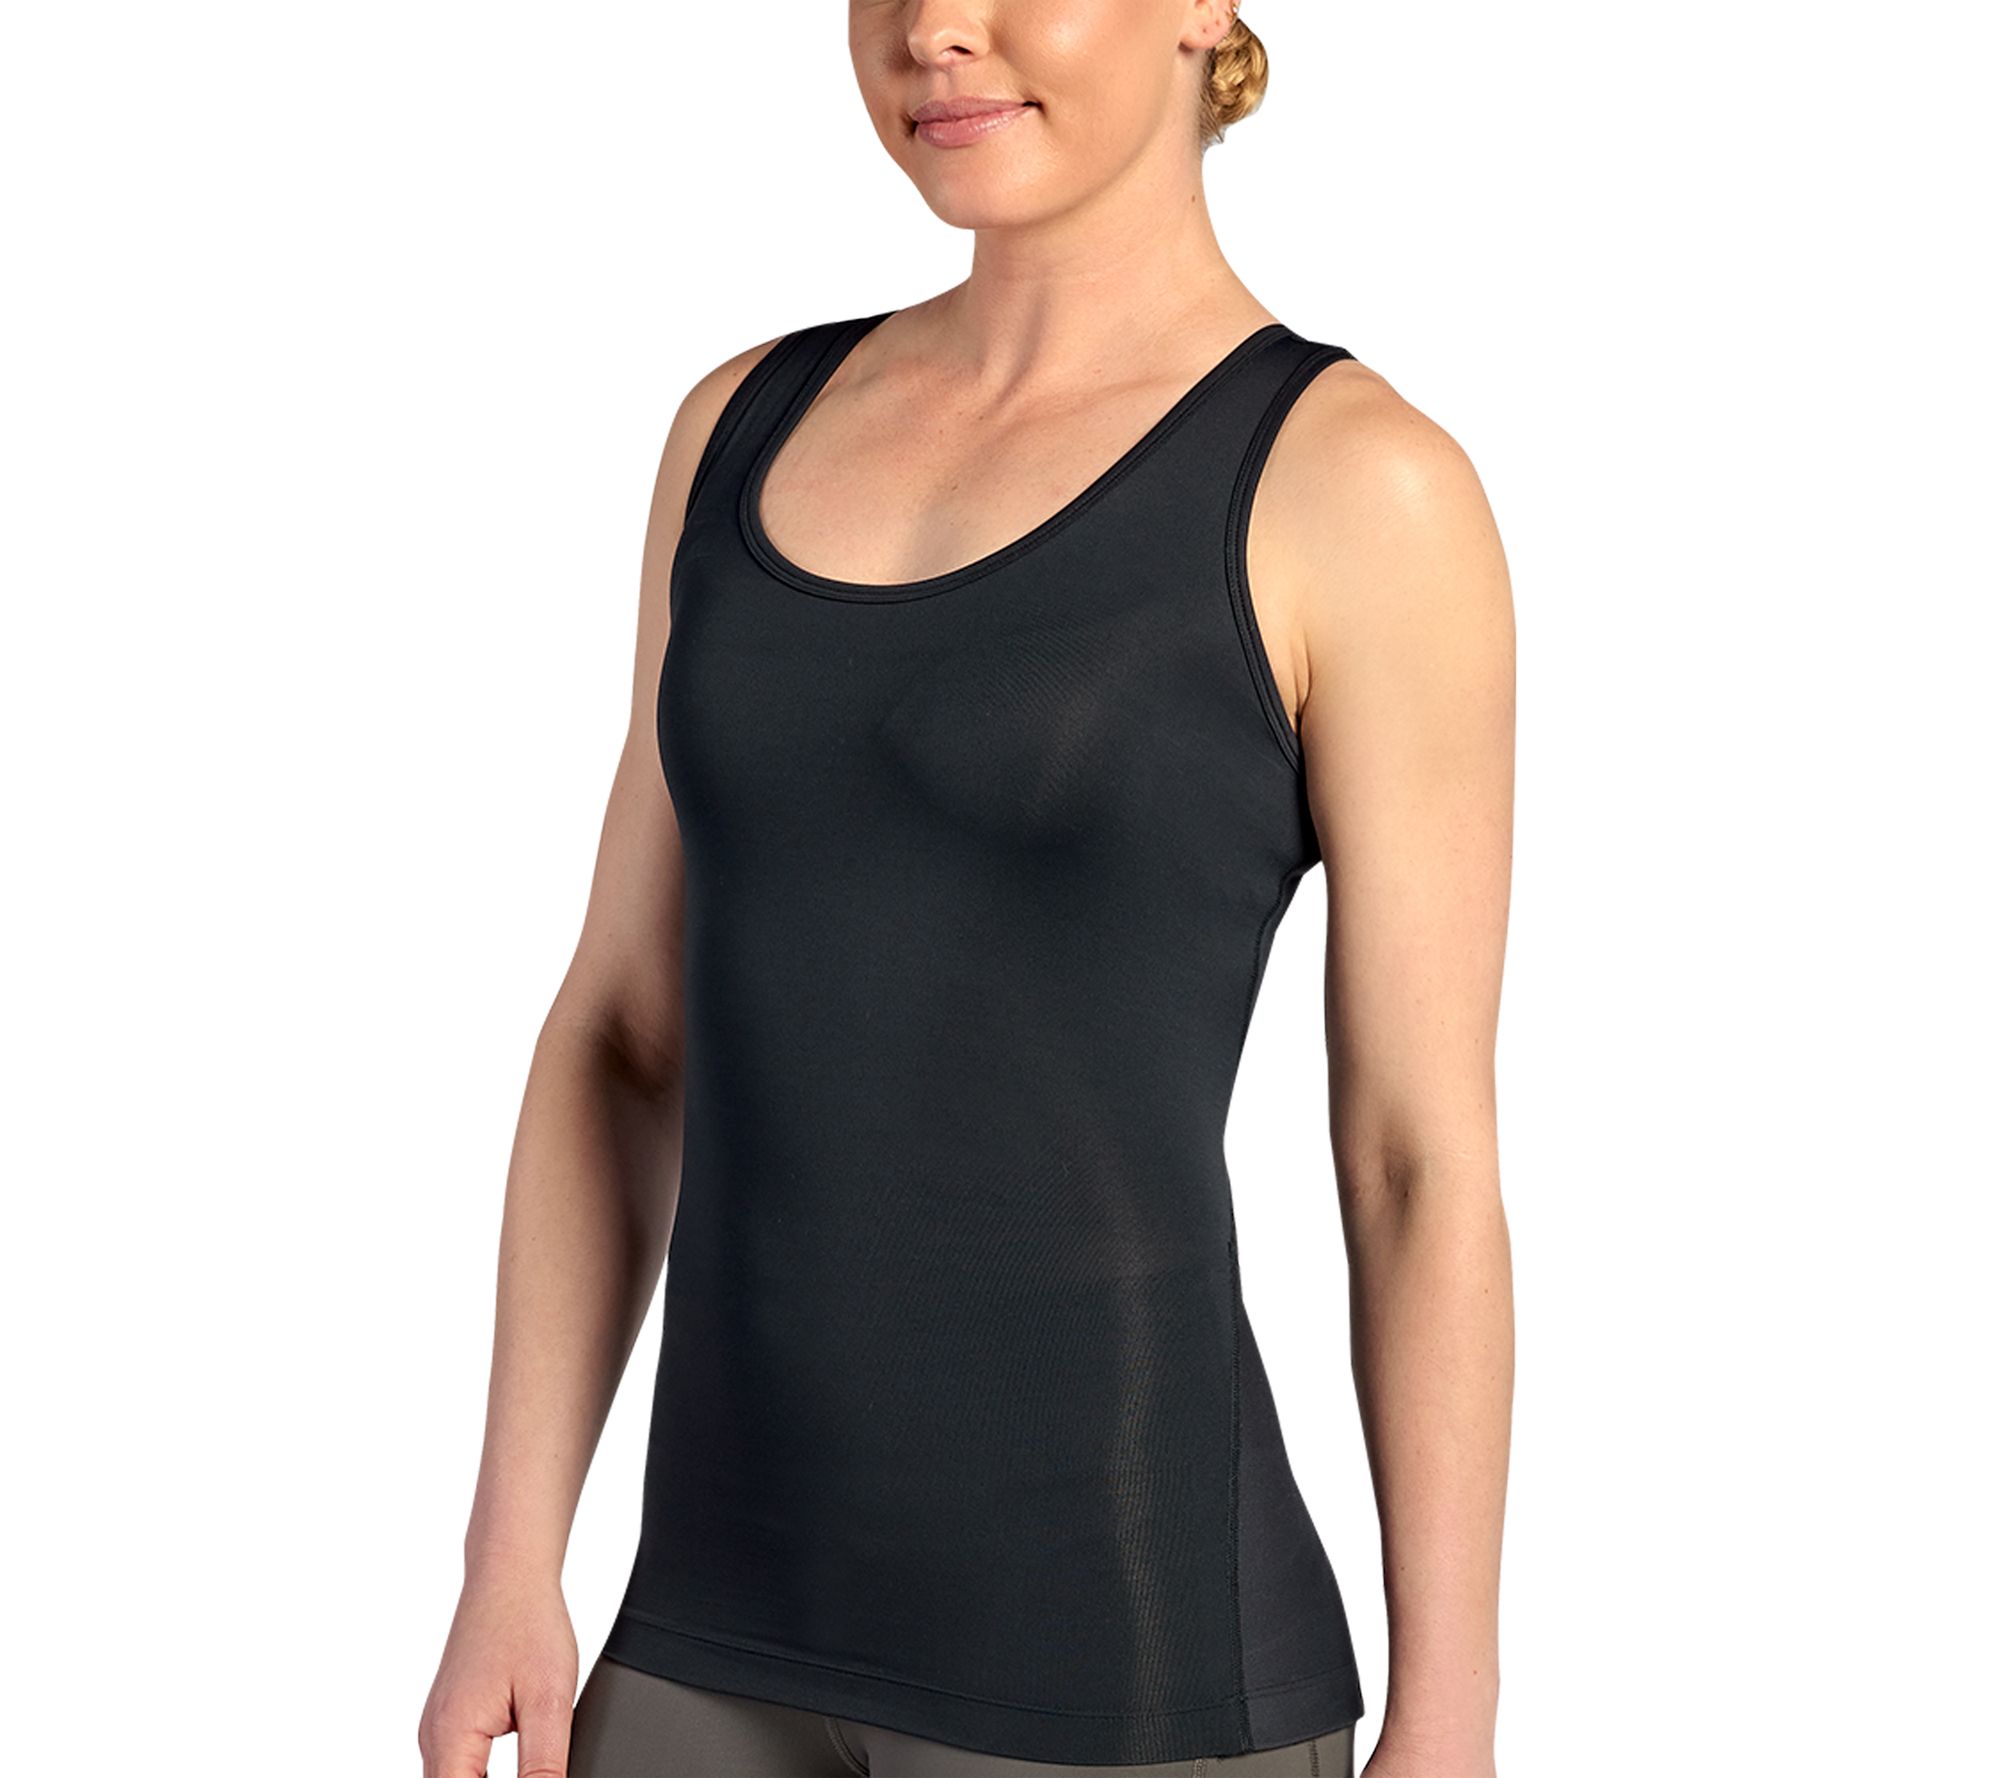 Tommie Copper Women's L/S Shoulder Support Shirt Black : :  Clothing, Shoes & Accessories